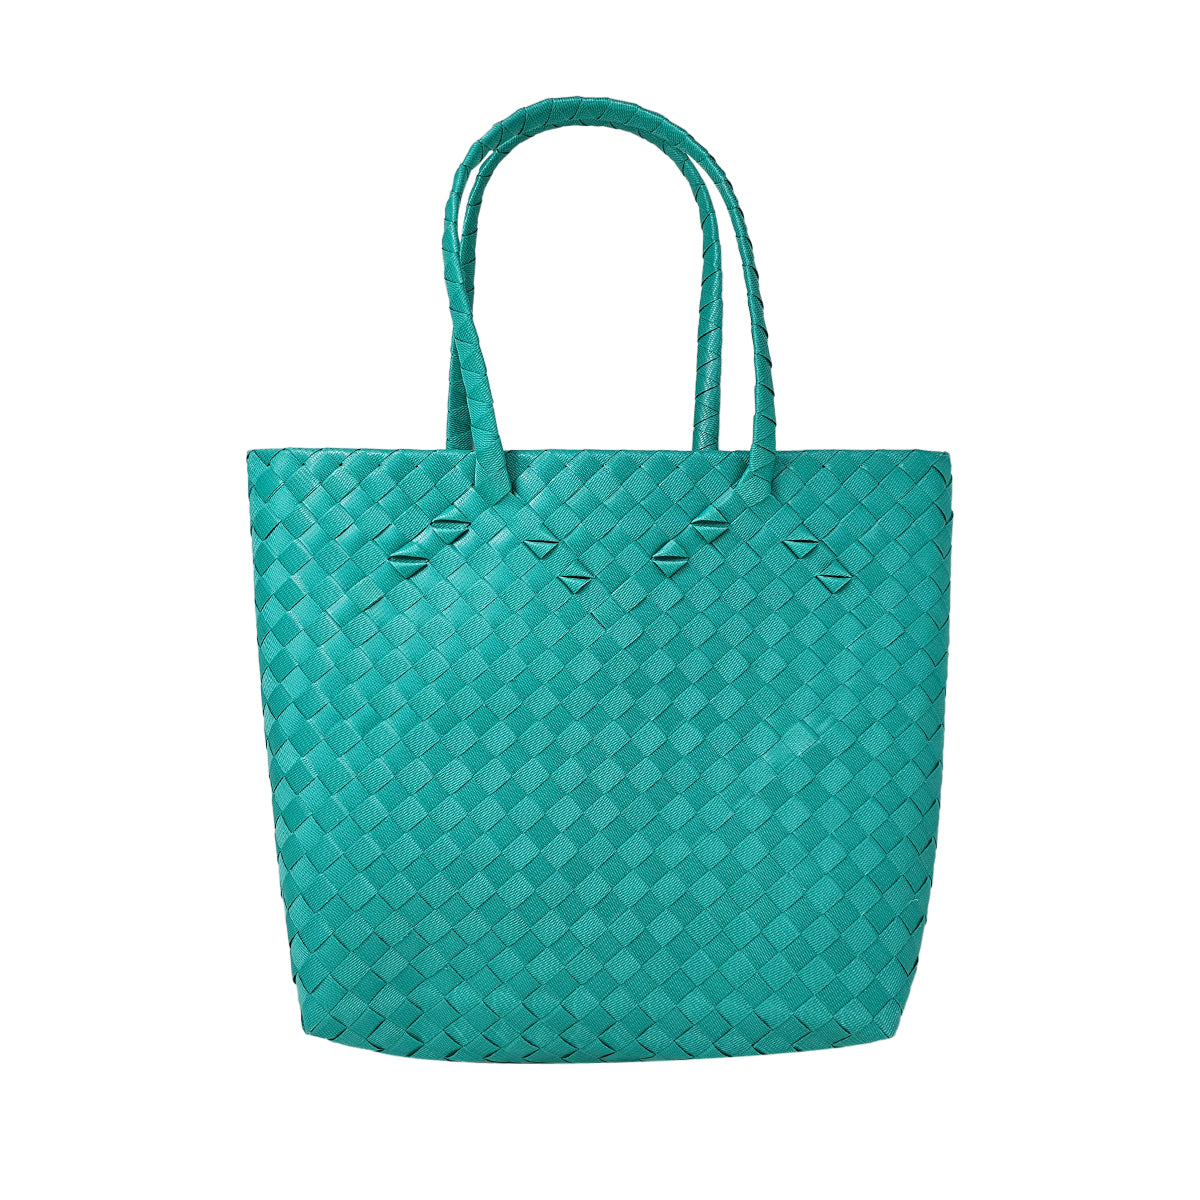 Misenka Handicrafts Philippine Bayong Mint Green Go with Zipper Bag - SALE 50% OFF